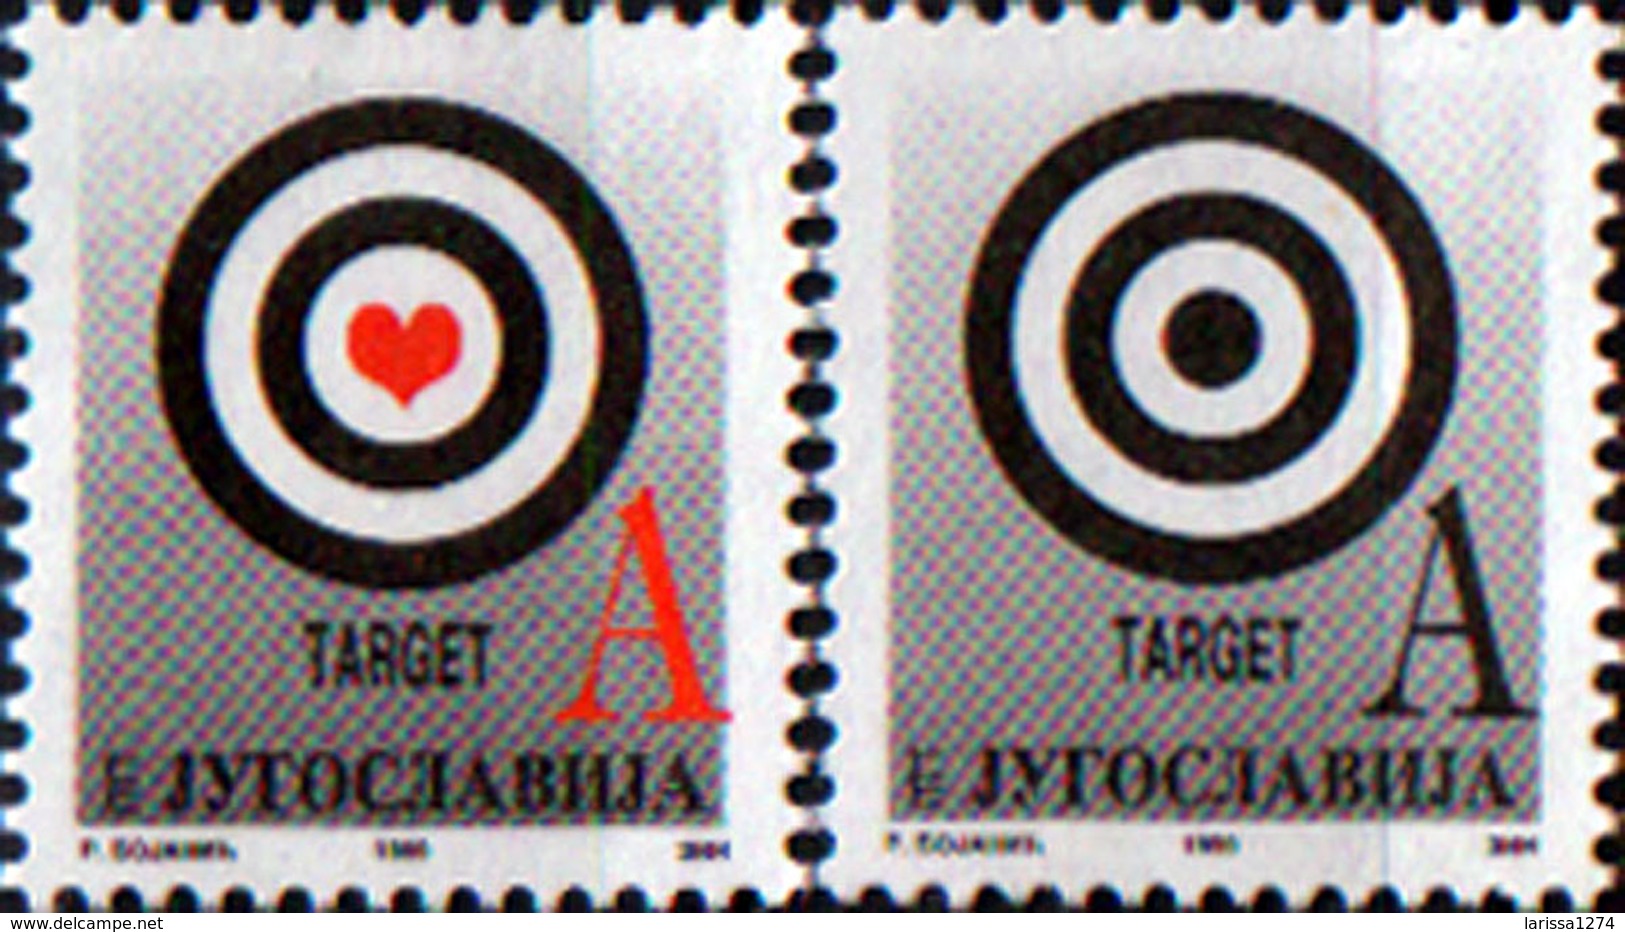 YUGOSLAVIA 1999 Definitive Target Face Value “A” Set MNH - Annate Complete